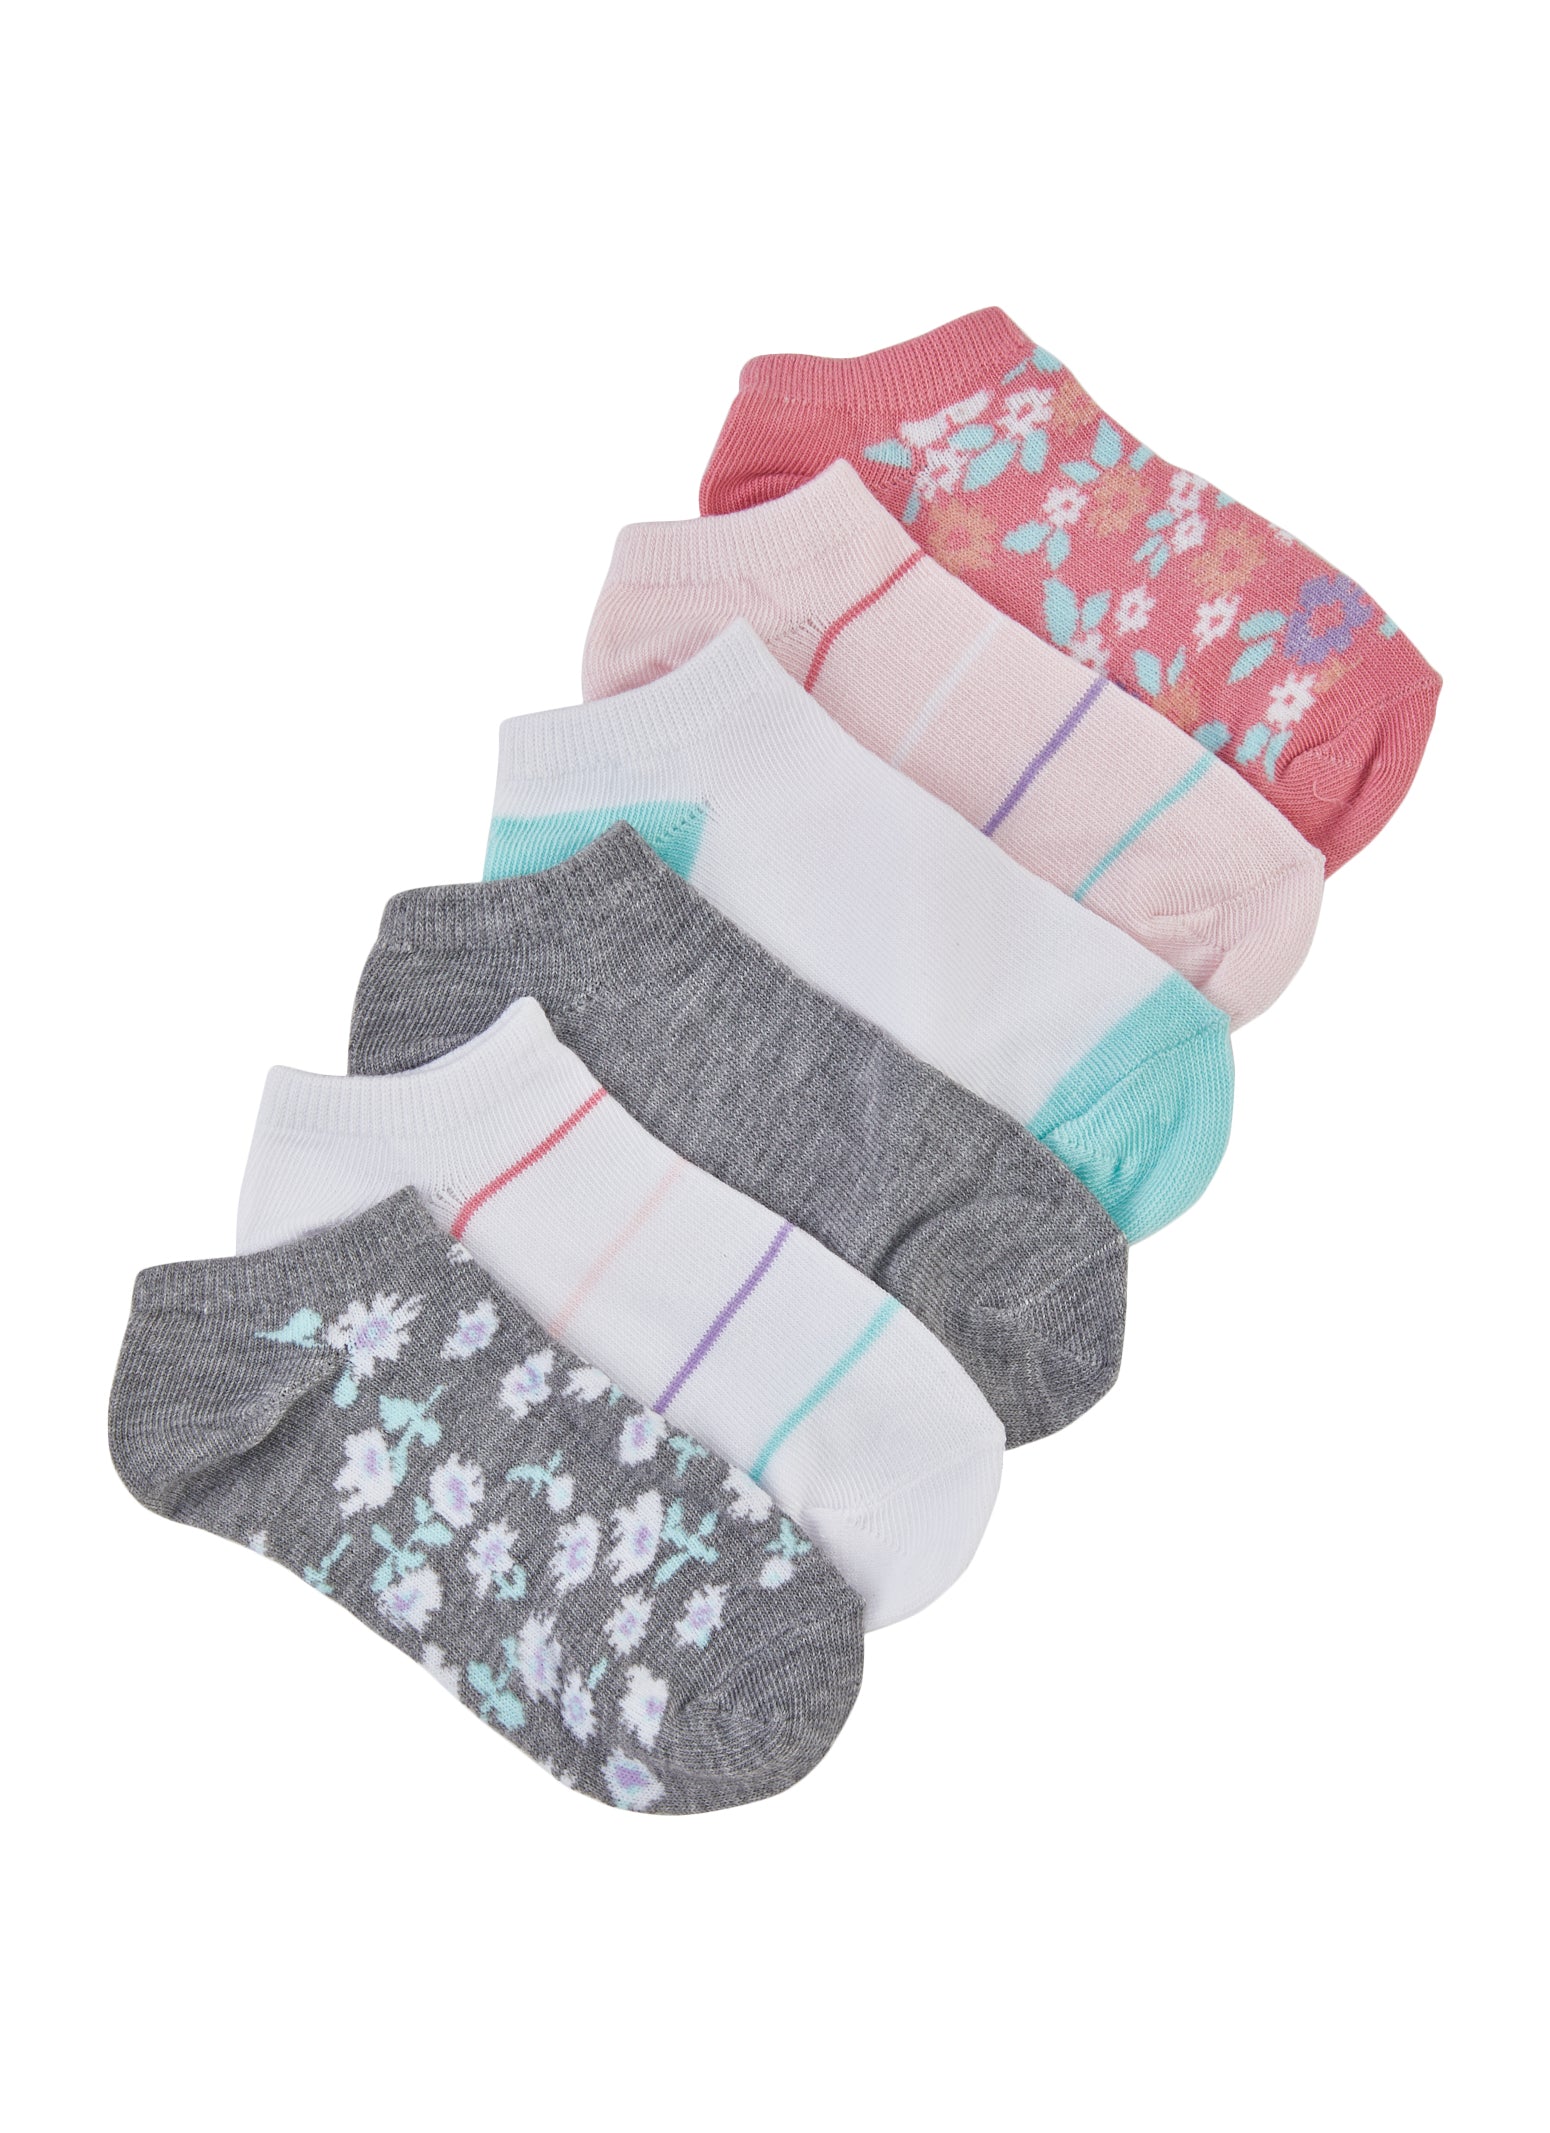 Women's Floral Print Socks